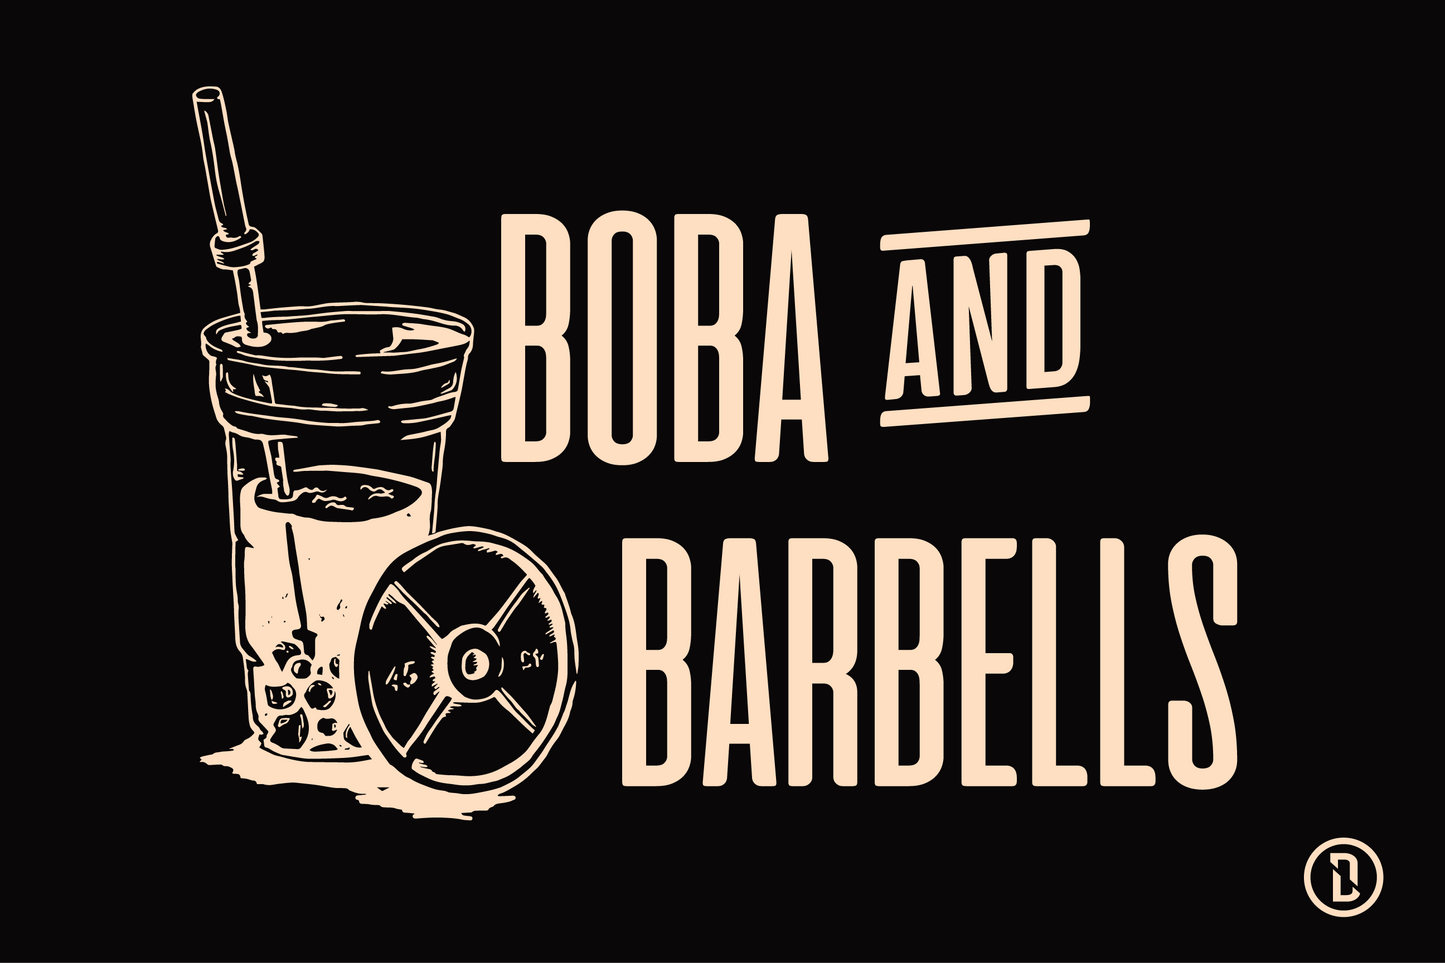 Boba and Barbells Vinyl Banner